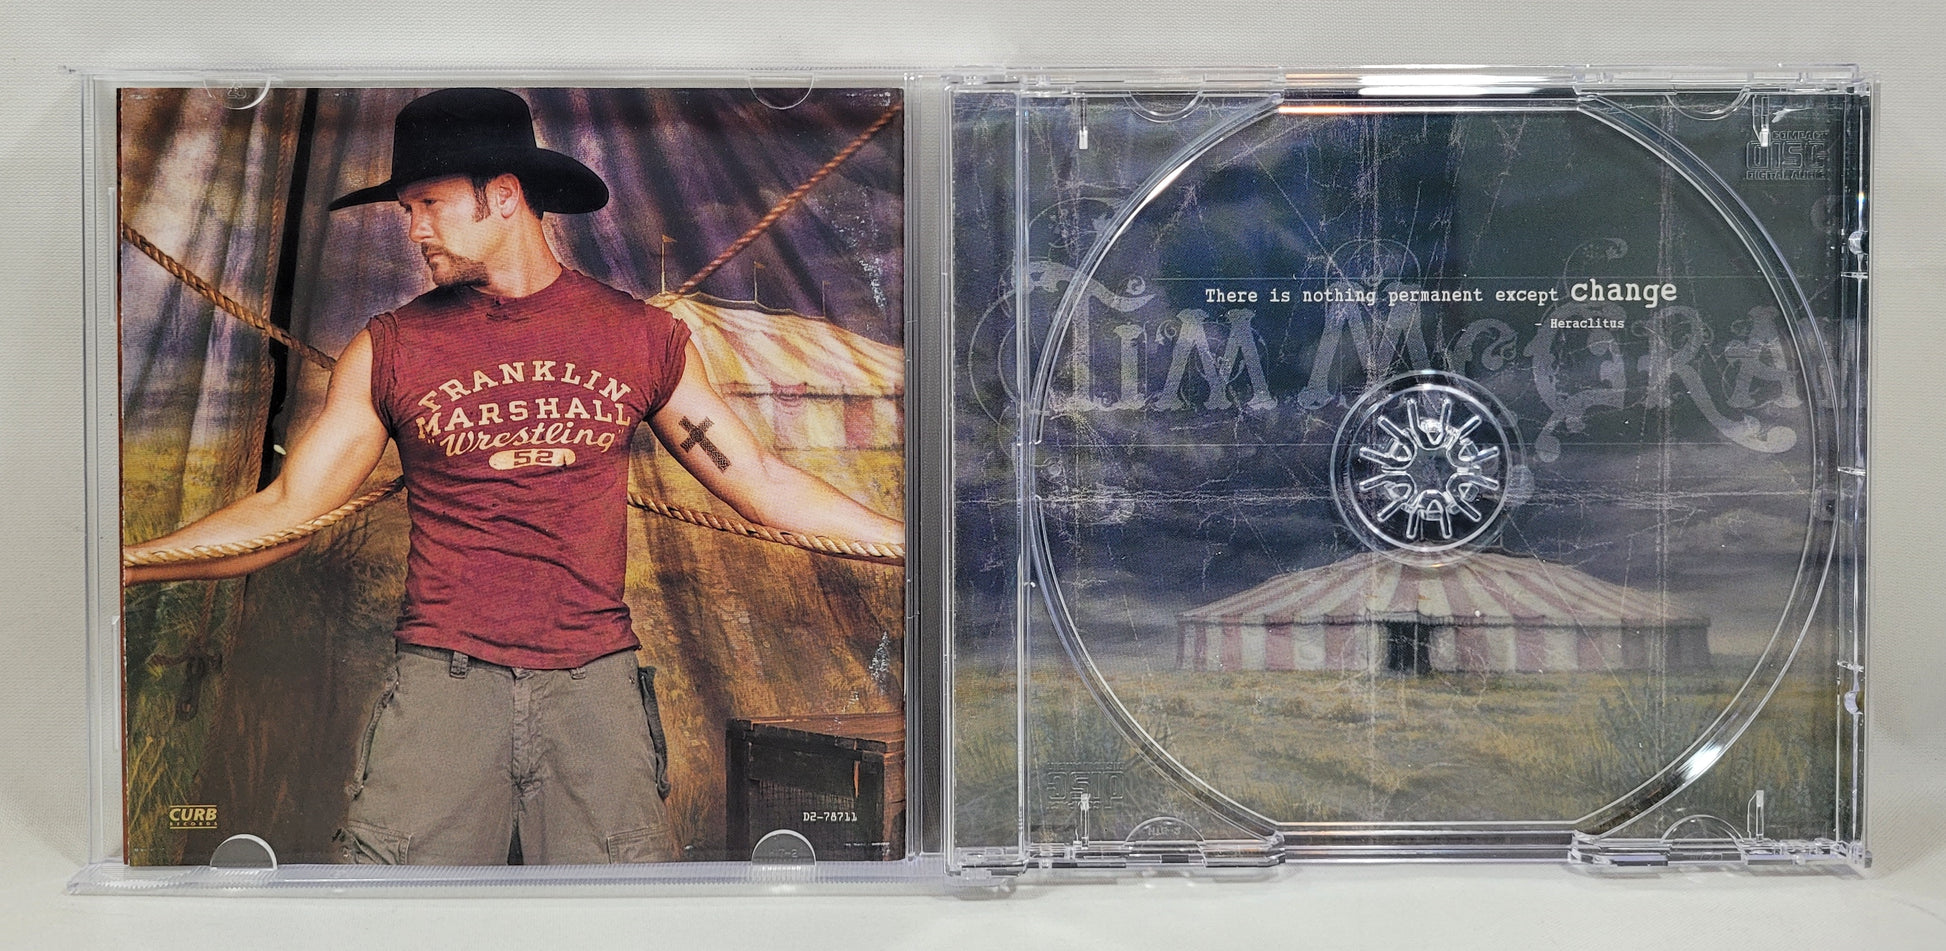 Tim McGraw - Set This Circus Down [2001 Used CD] [B]